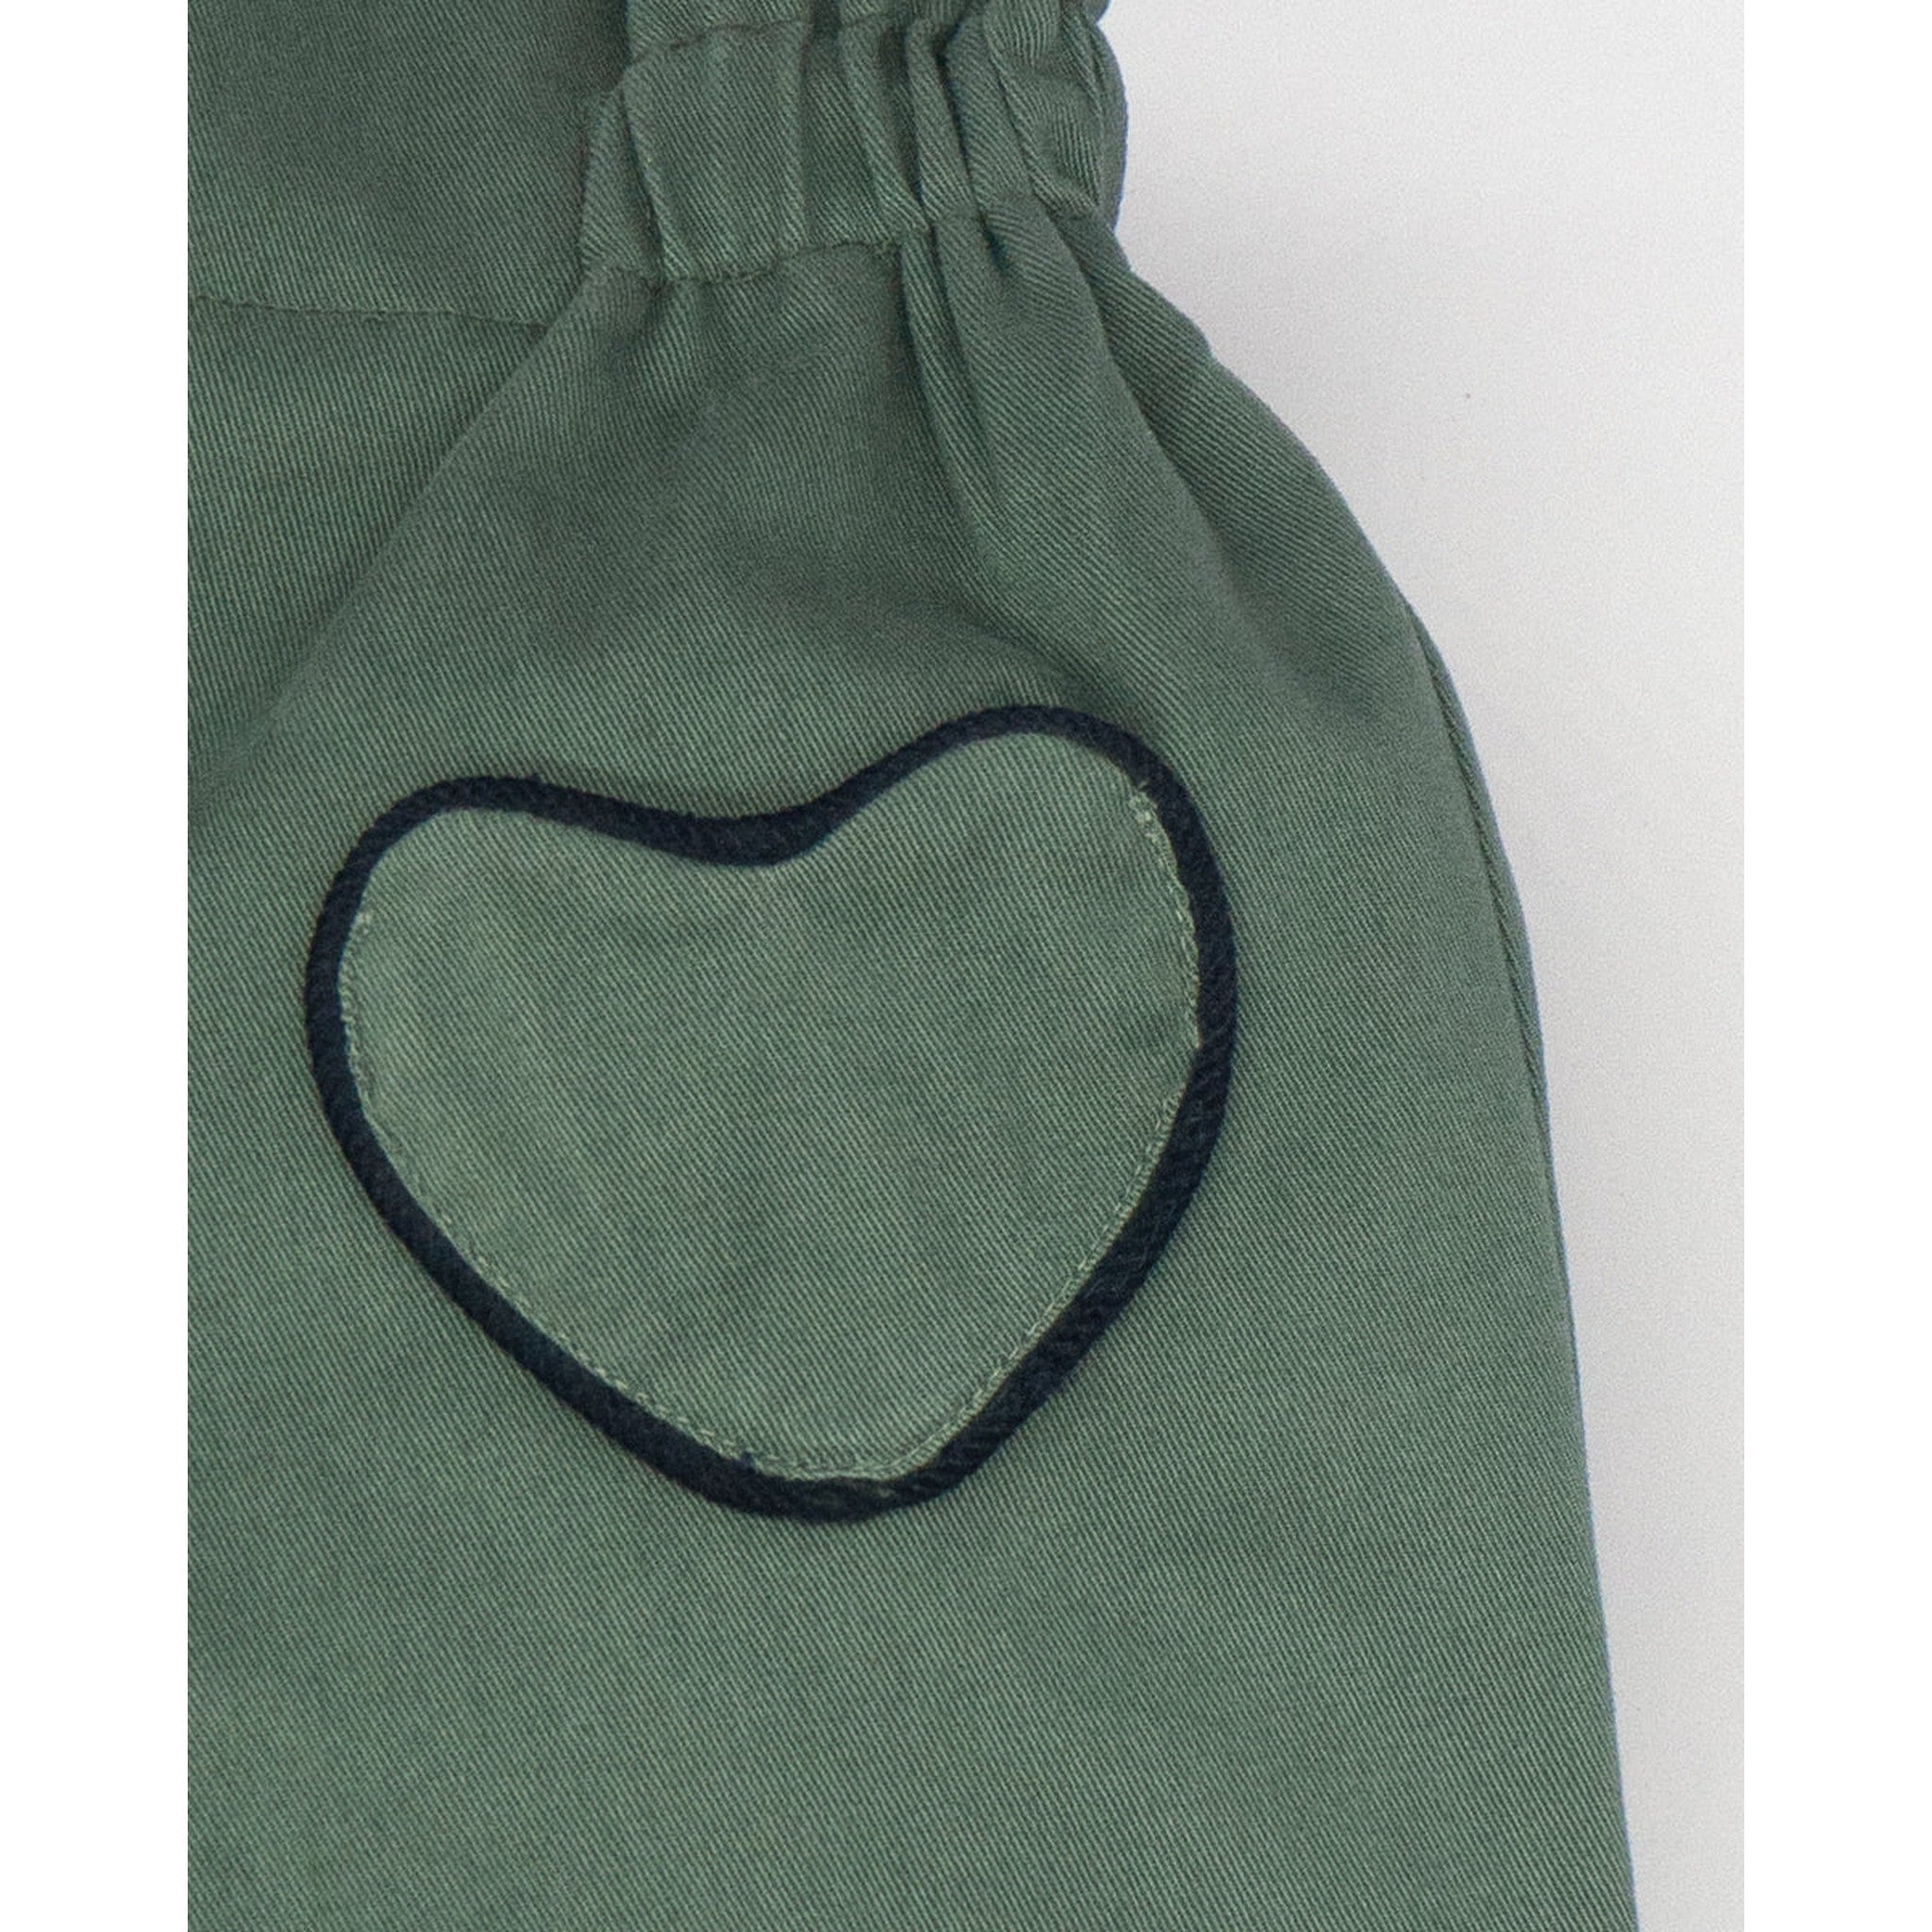 Olive Green Heart Pant Set